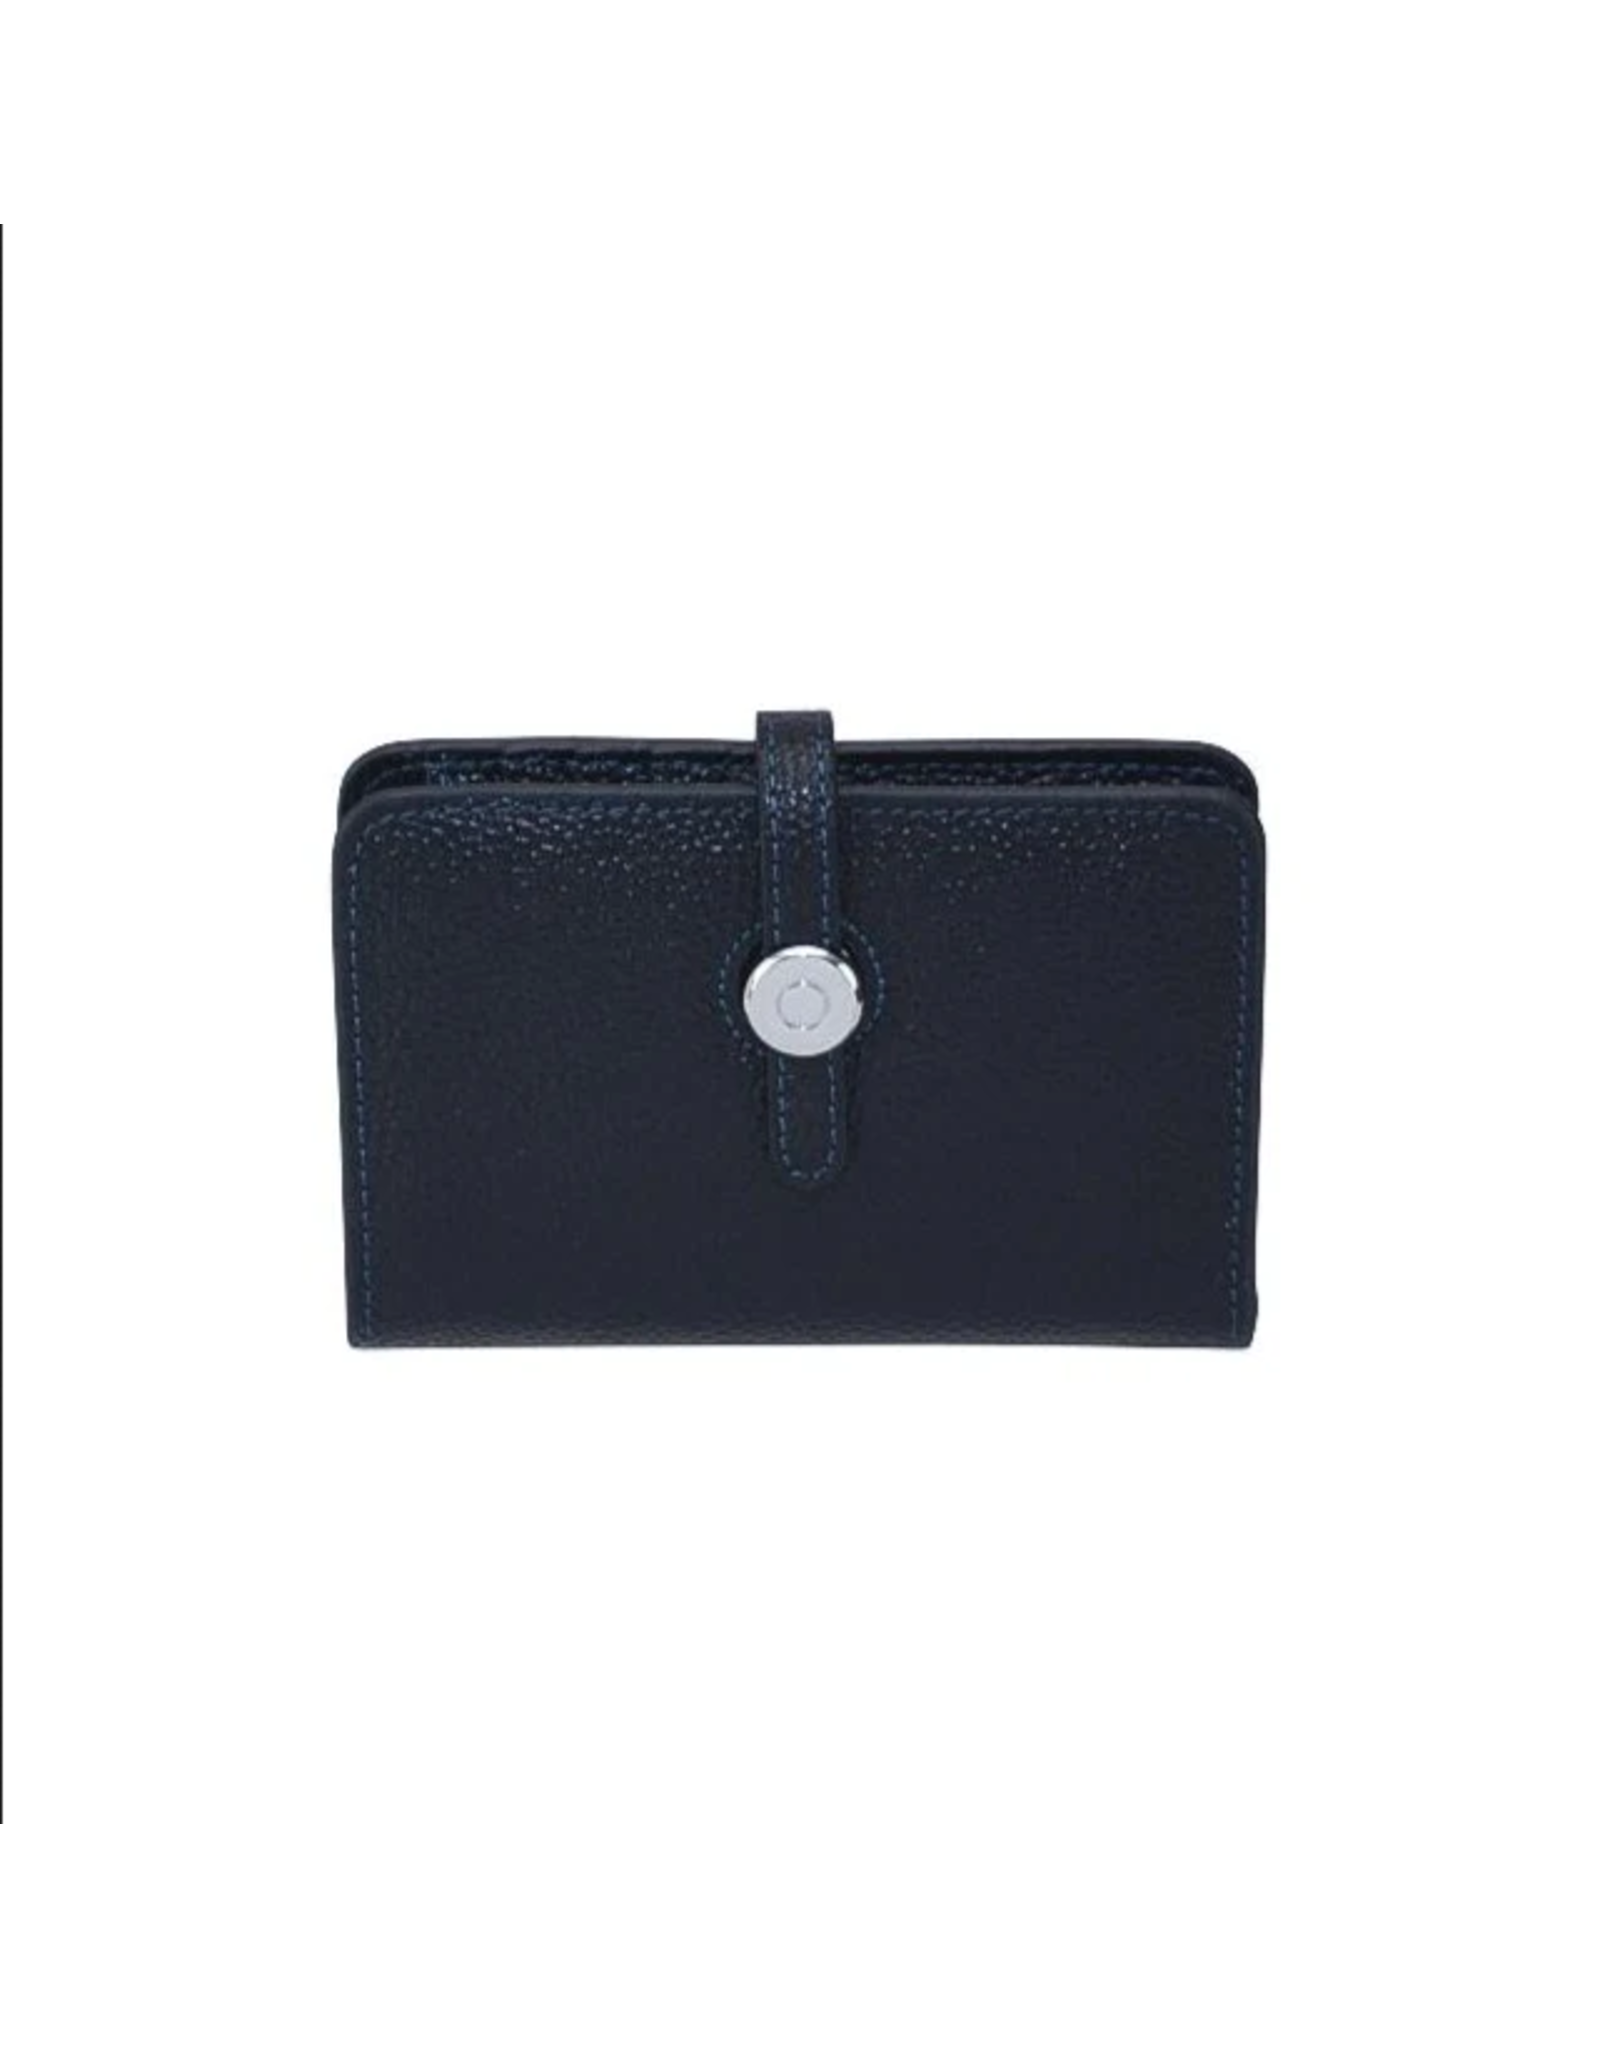 BC Handbags Leather Wallet - Medium Sized